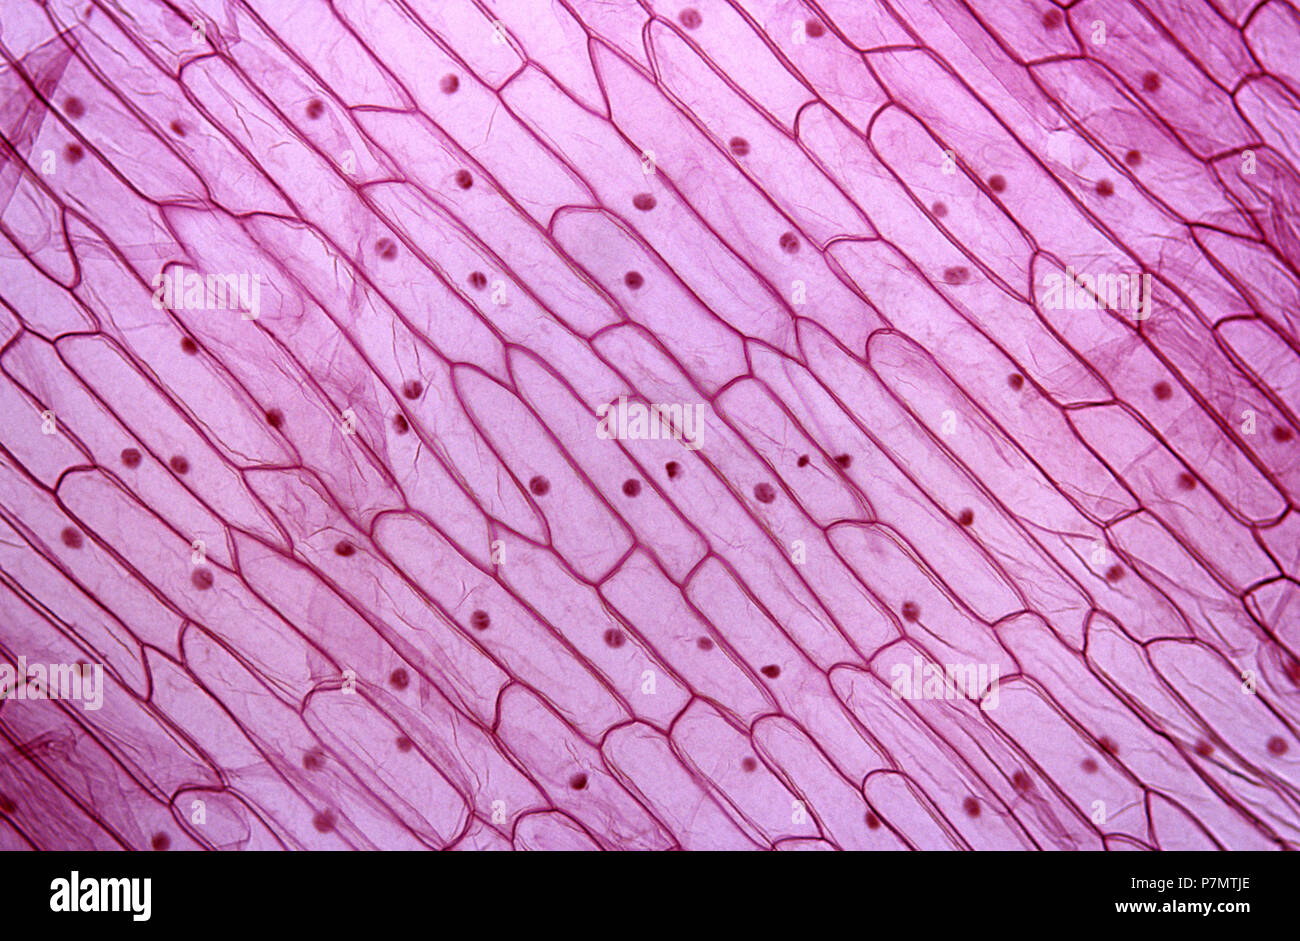 Les Cellules D Epiderme De Jardin Oignon Allium Cepa Photo Stock Alamy